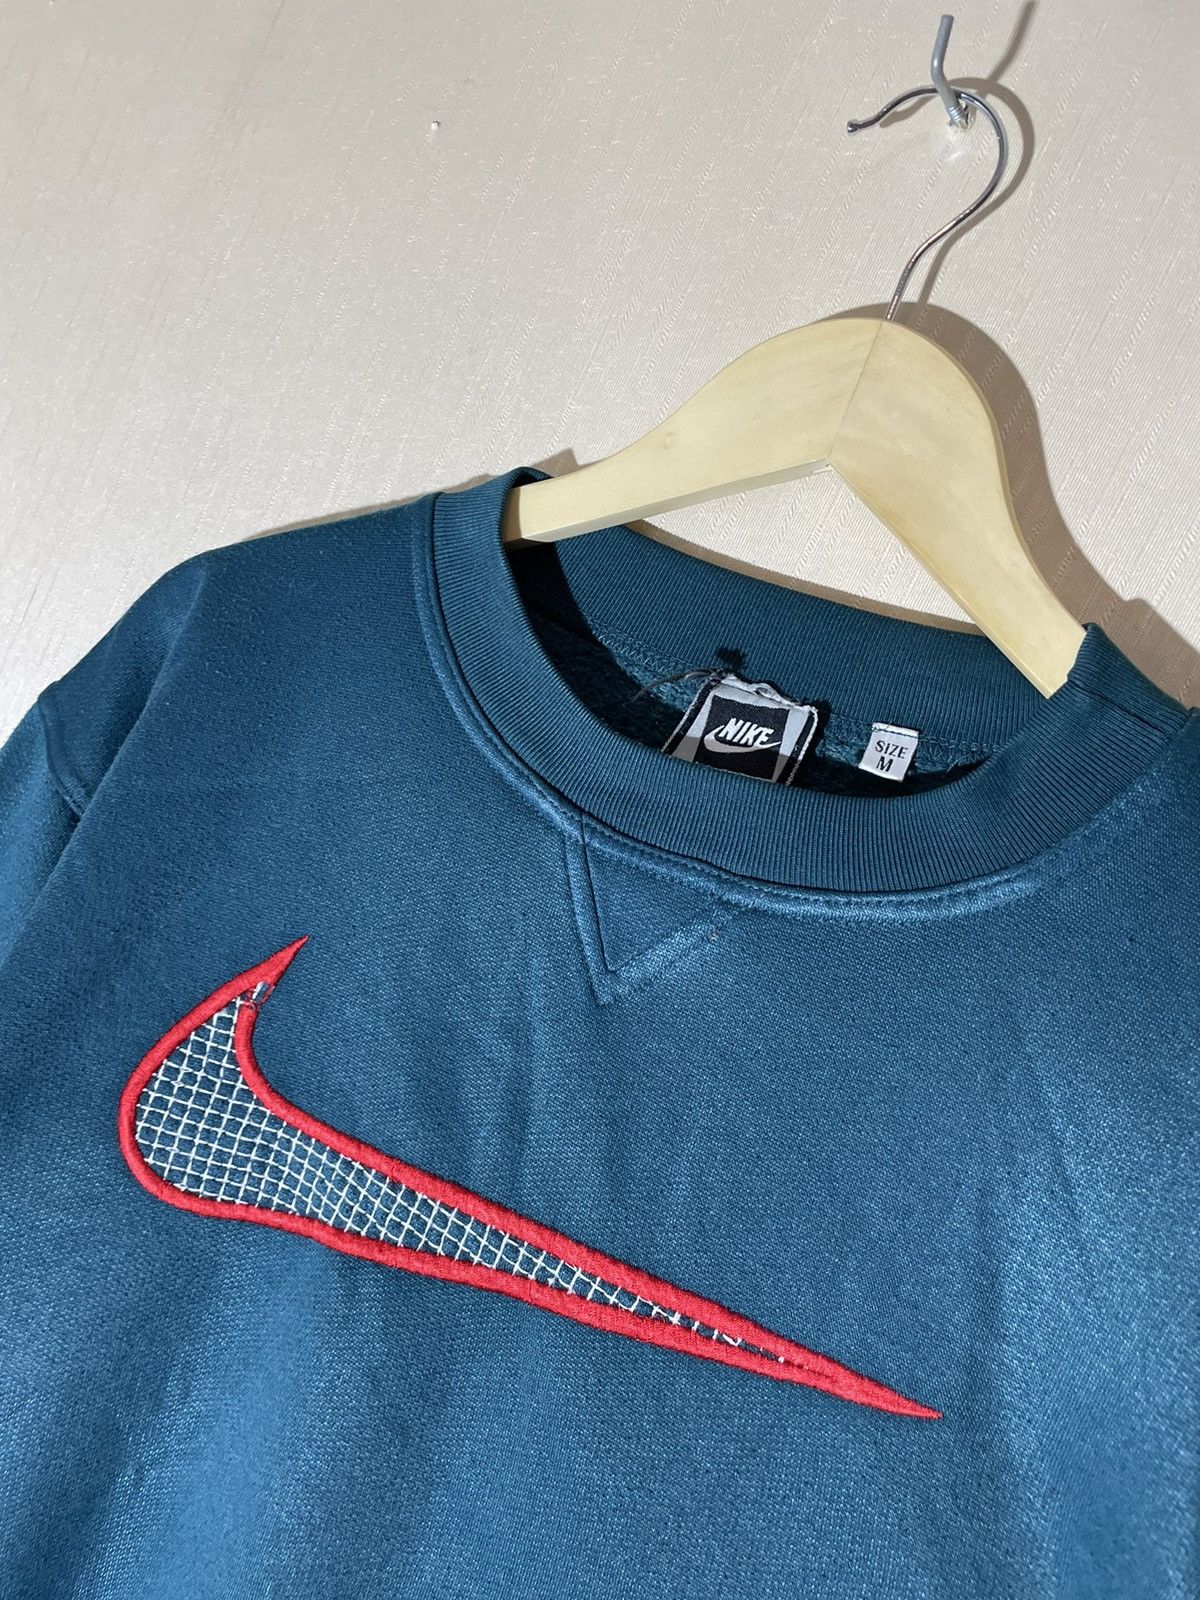 Nike Nike vintage y2k sweatshirt 80-90s Size US M / EU 48-50 / 2 - 7 Thumbnail